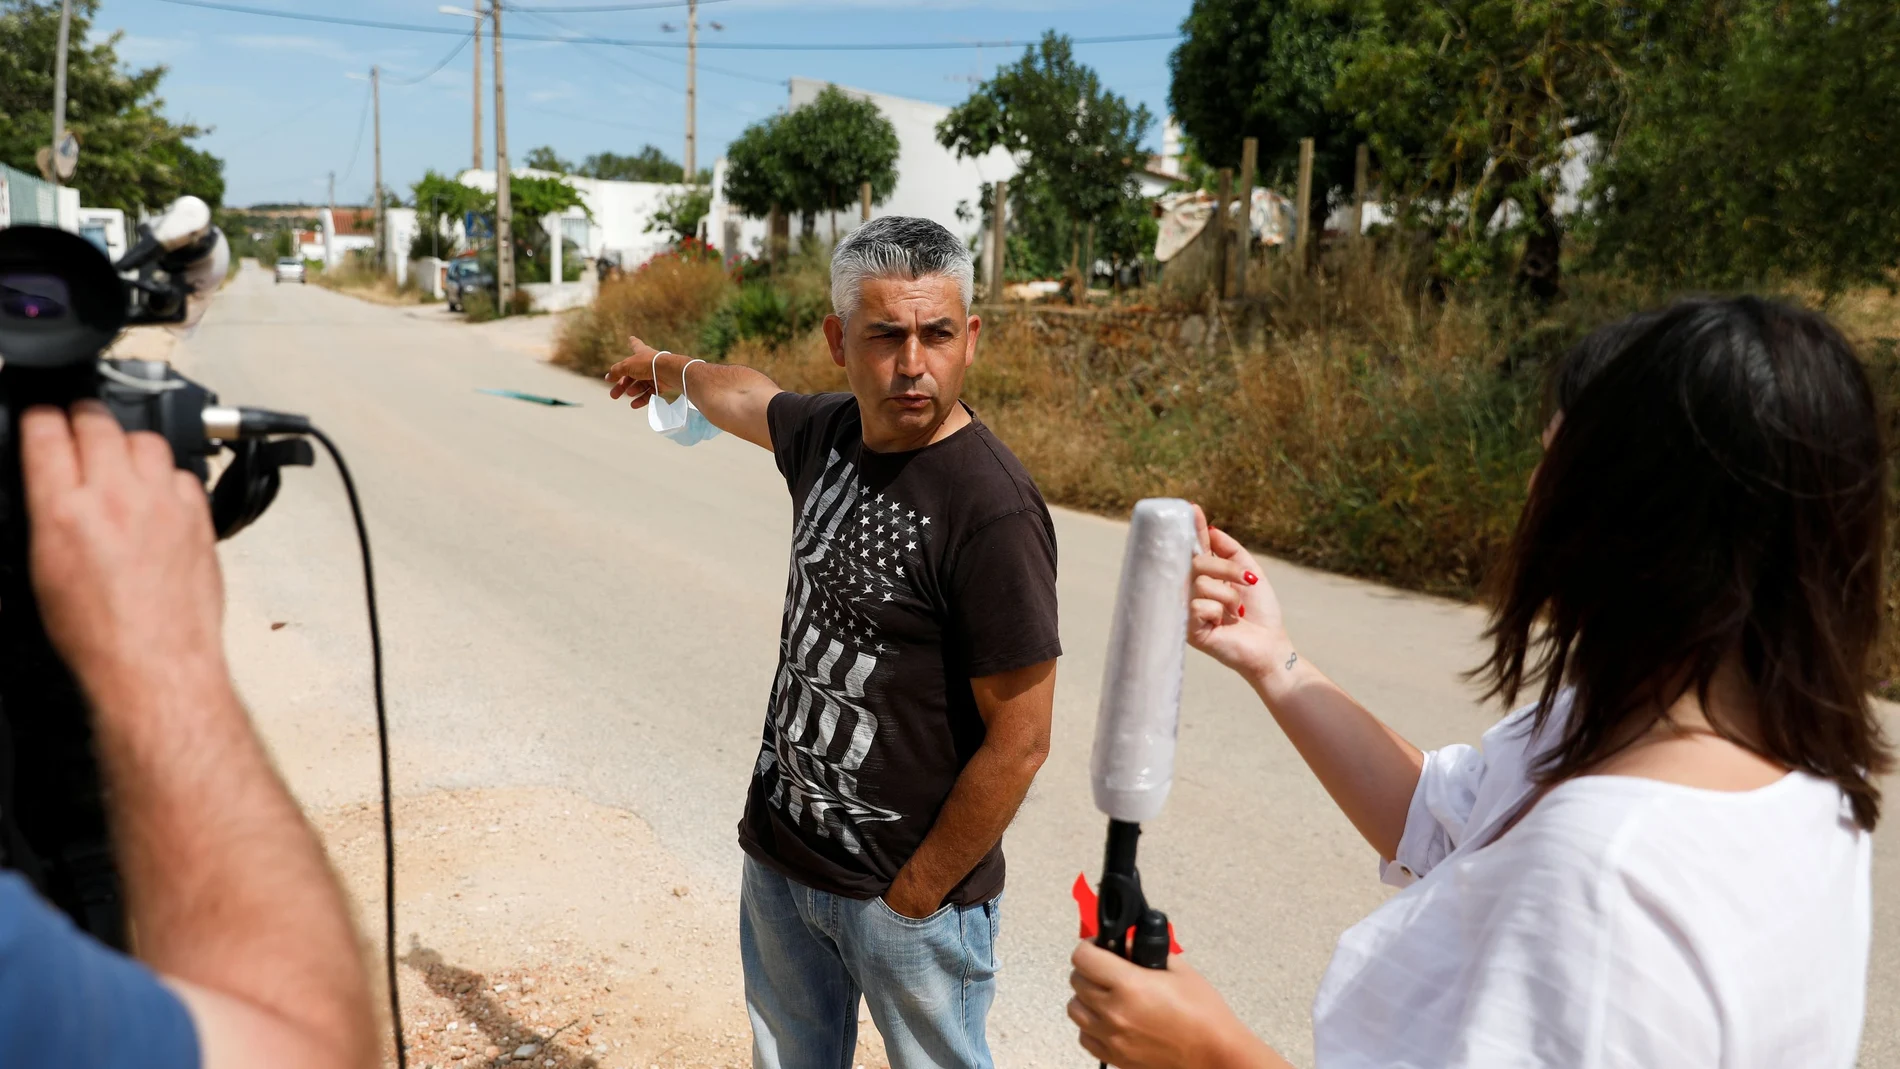 Interview with the neighbour of the suspect in the Madeleine McCann case, near Praia da Luz